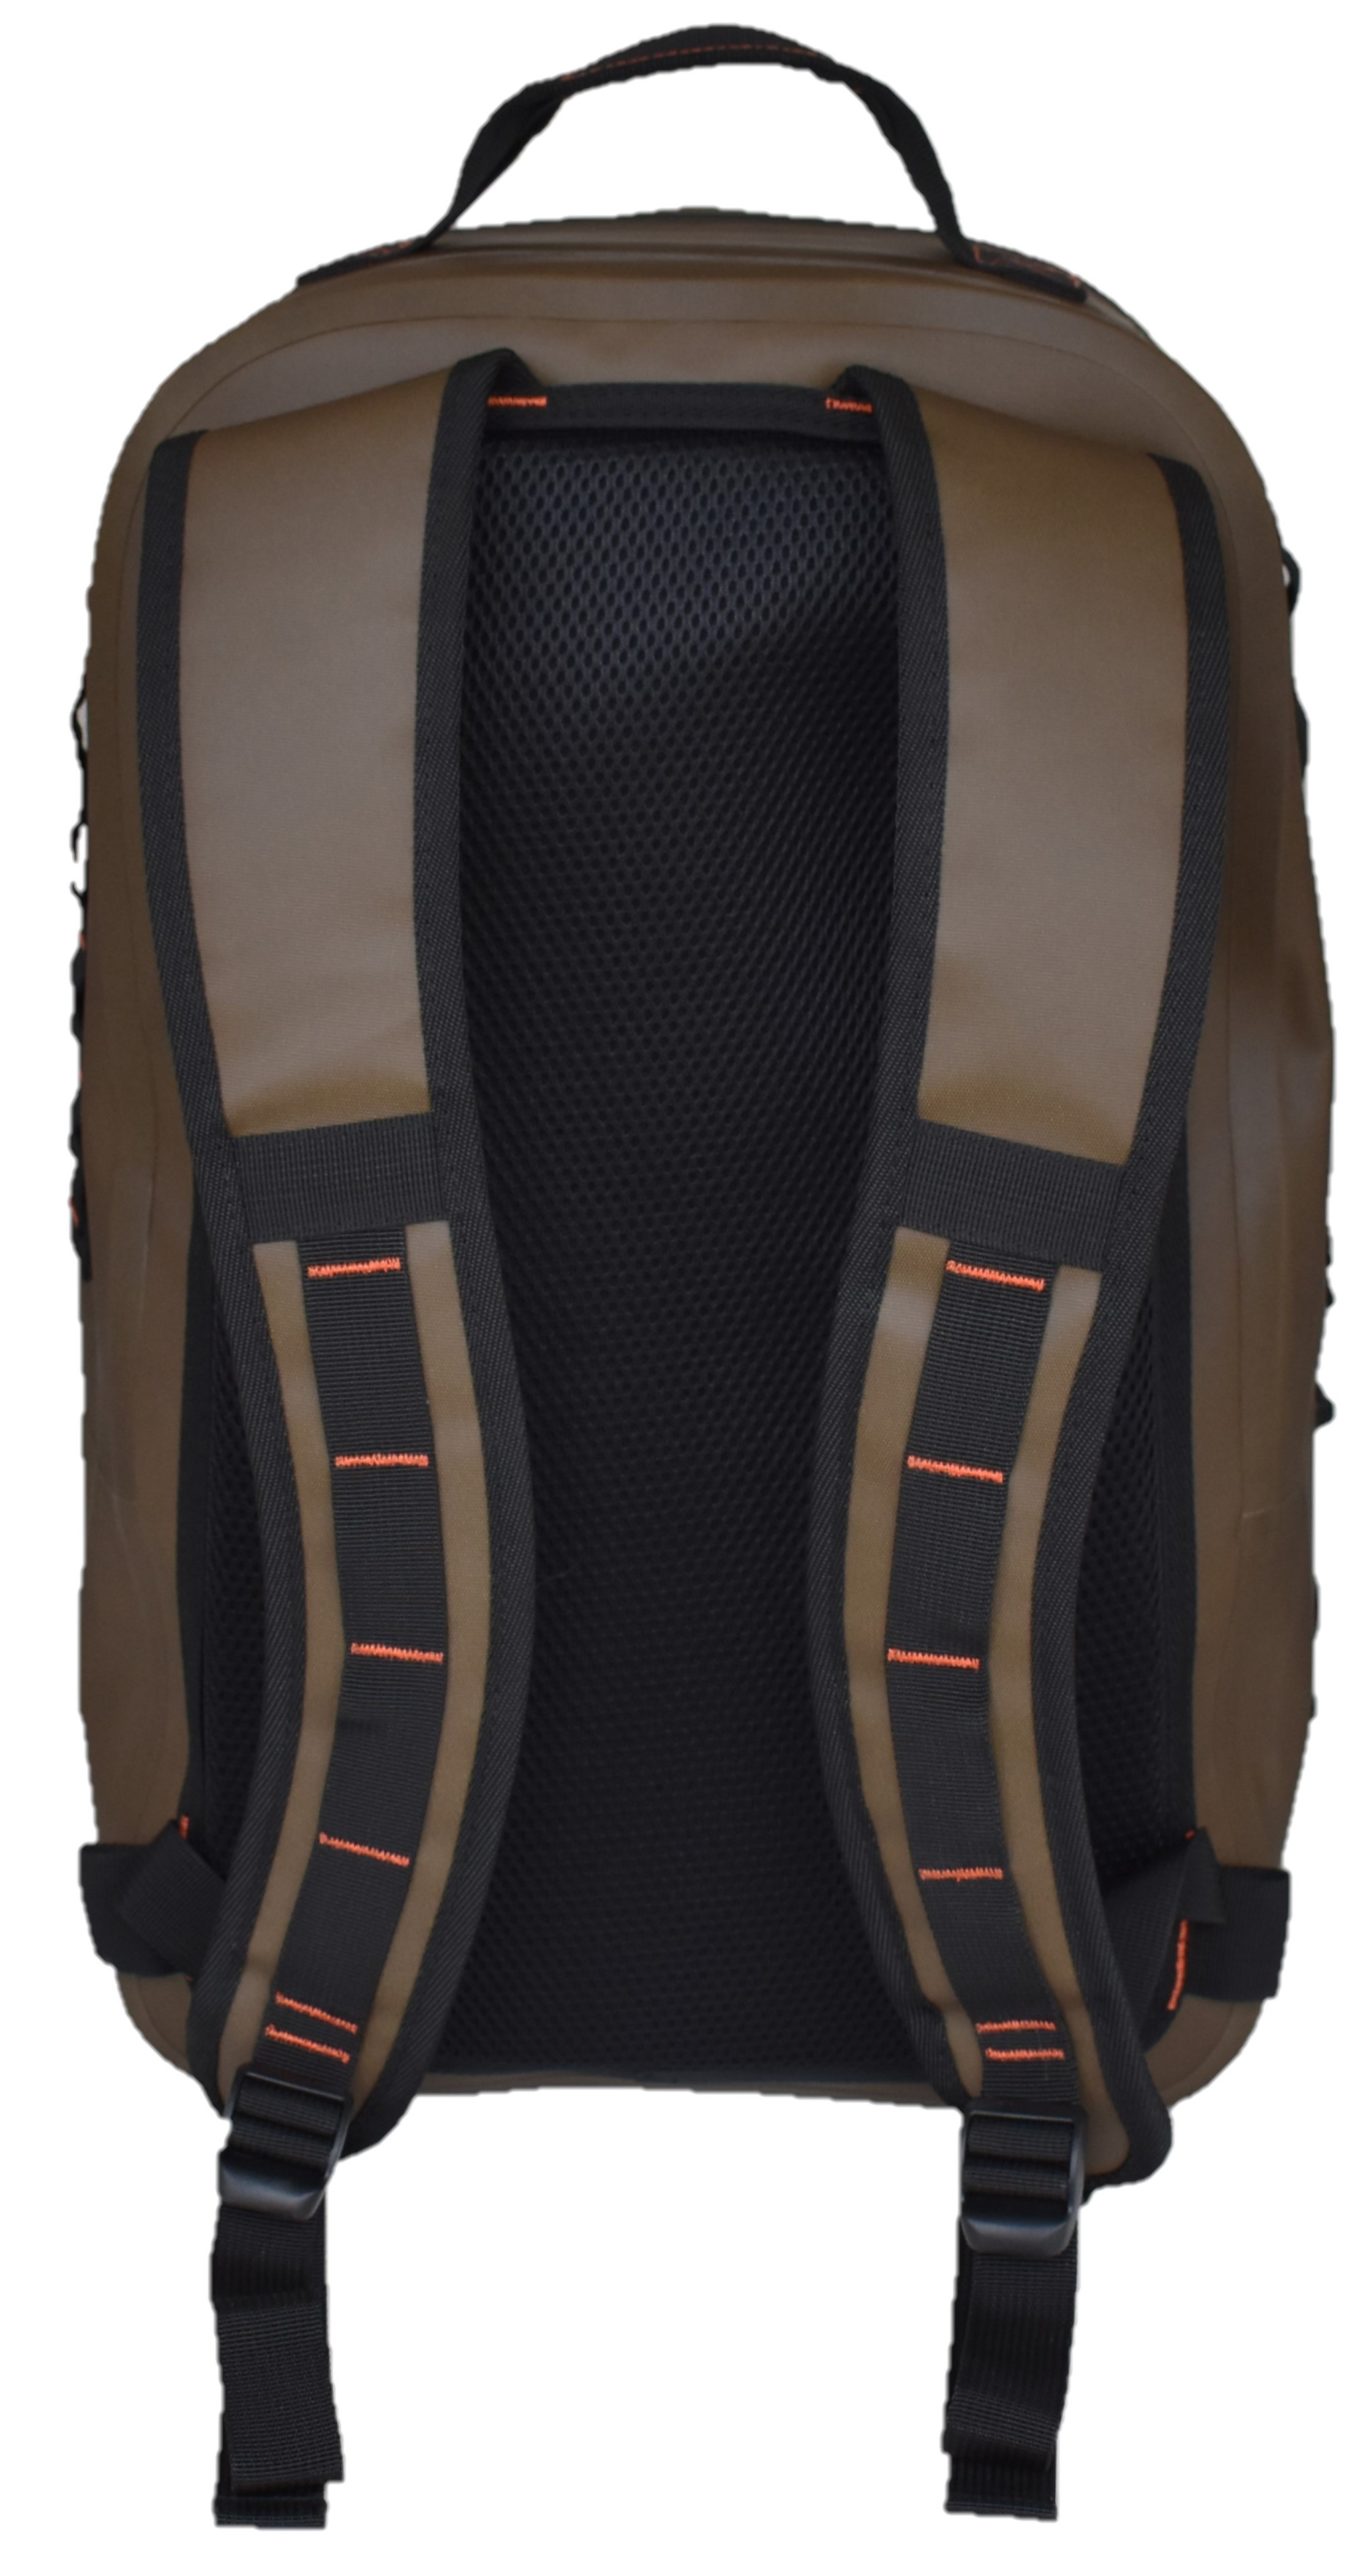 Waterproof Zipper backpack